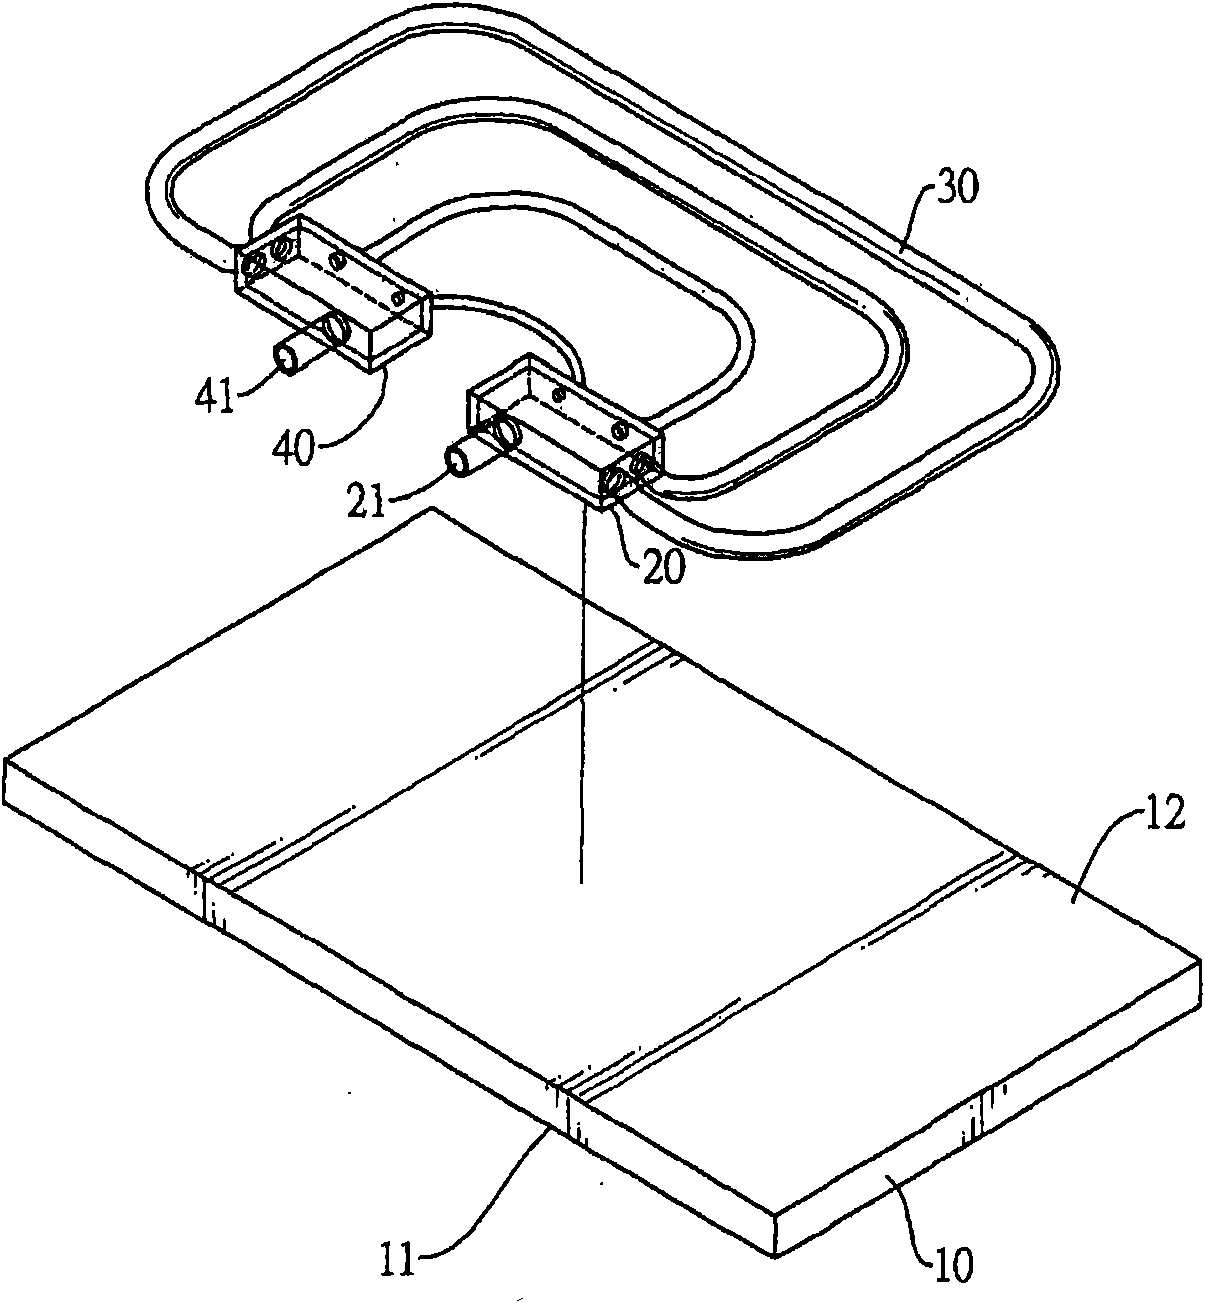 Large-area liquid-cooled heat dissipation device